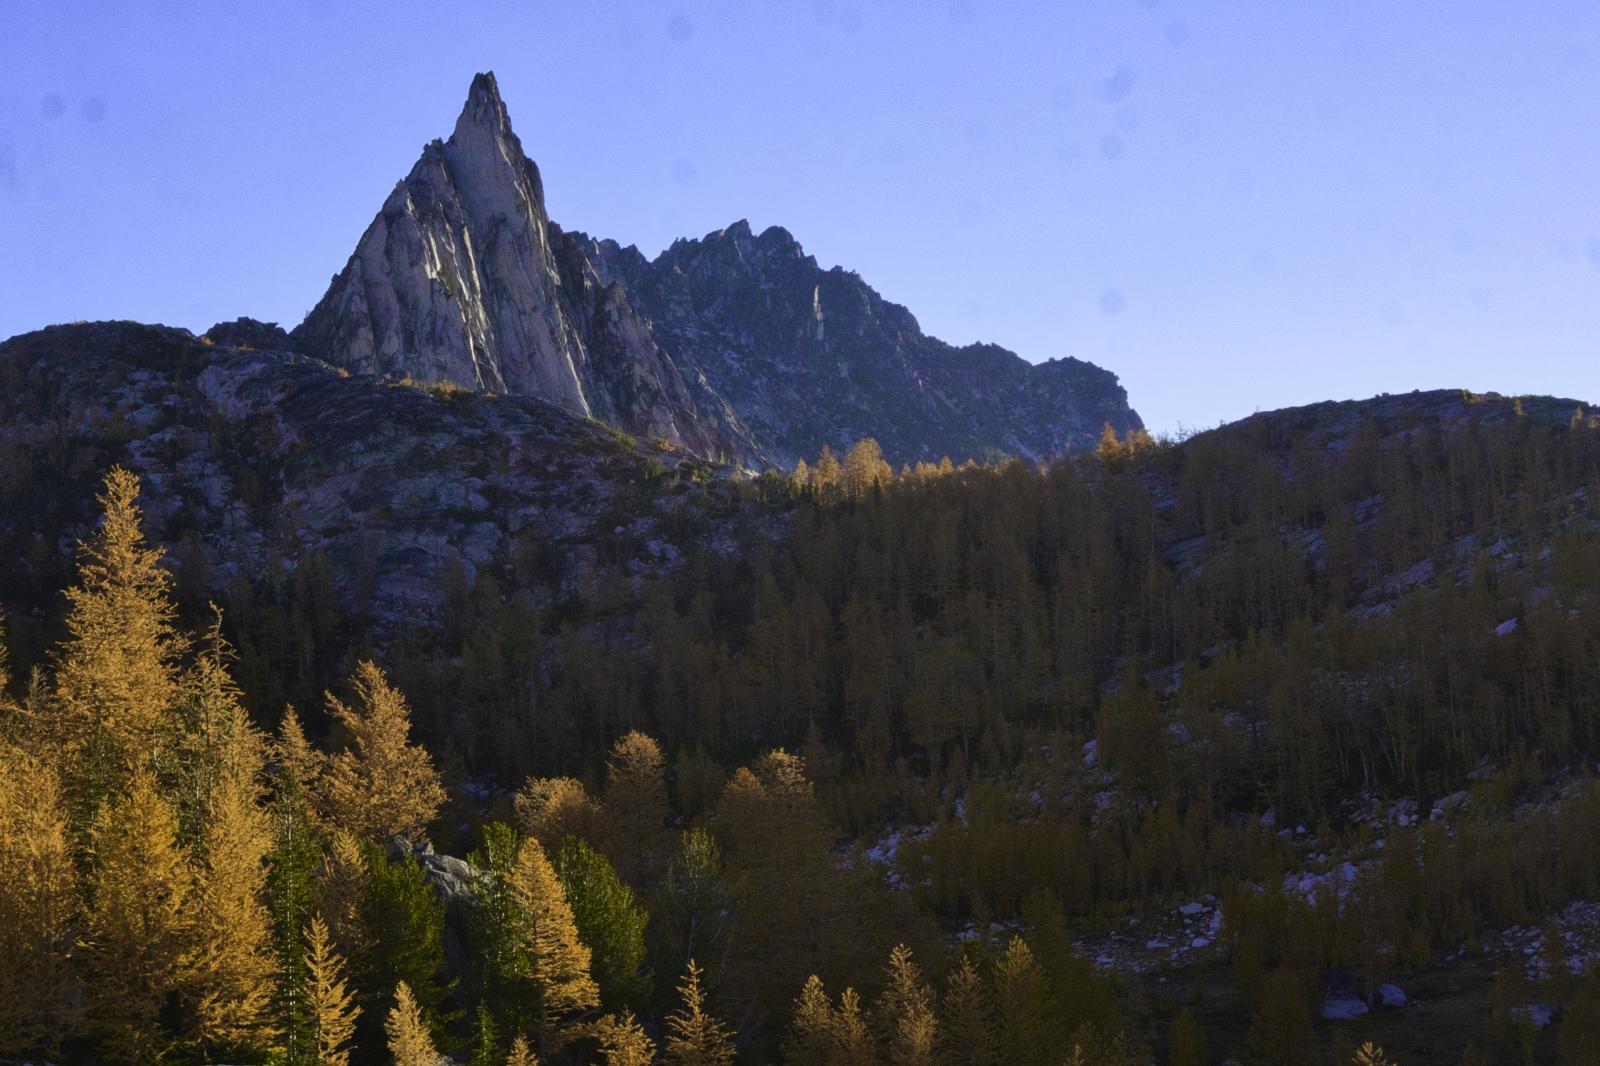 Prusik Peak with Fall Color at Dawn | Buy this image